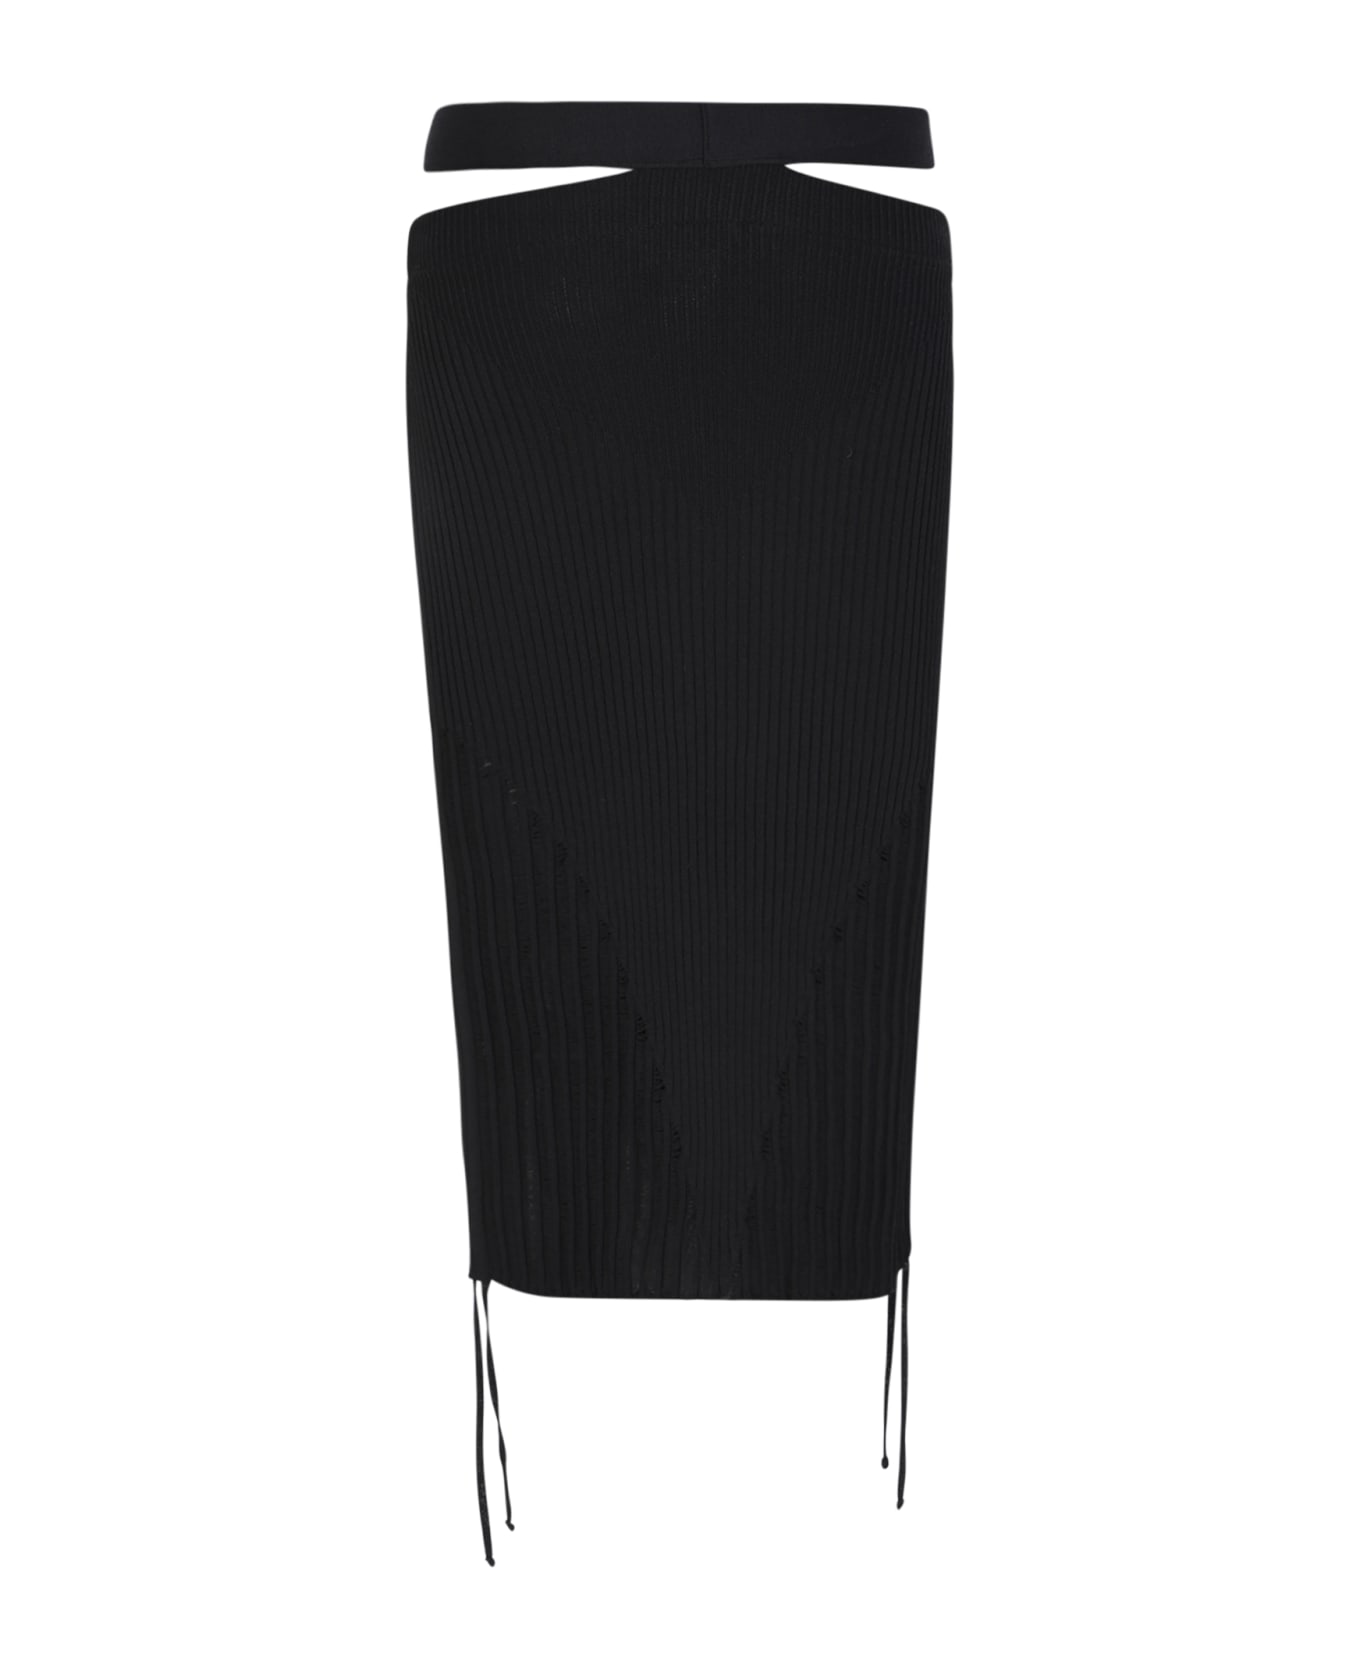 ANDREĀDAMO Black Skirt - Black